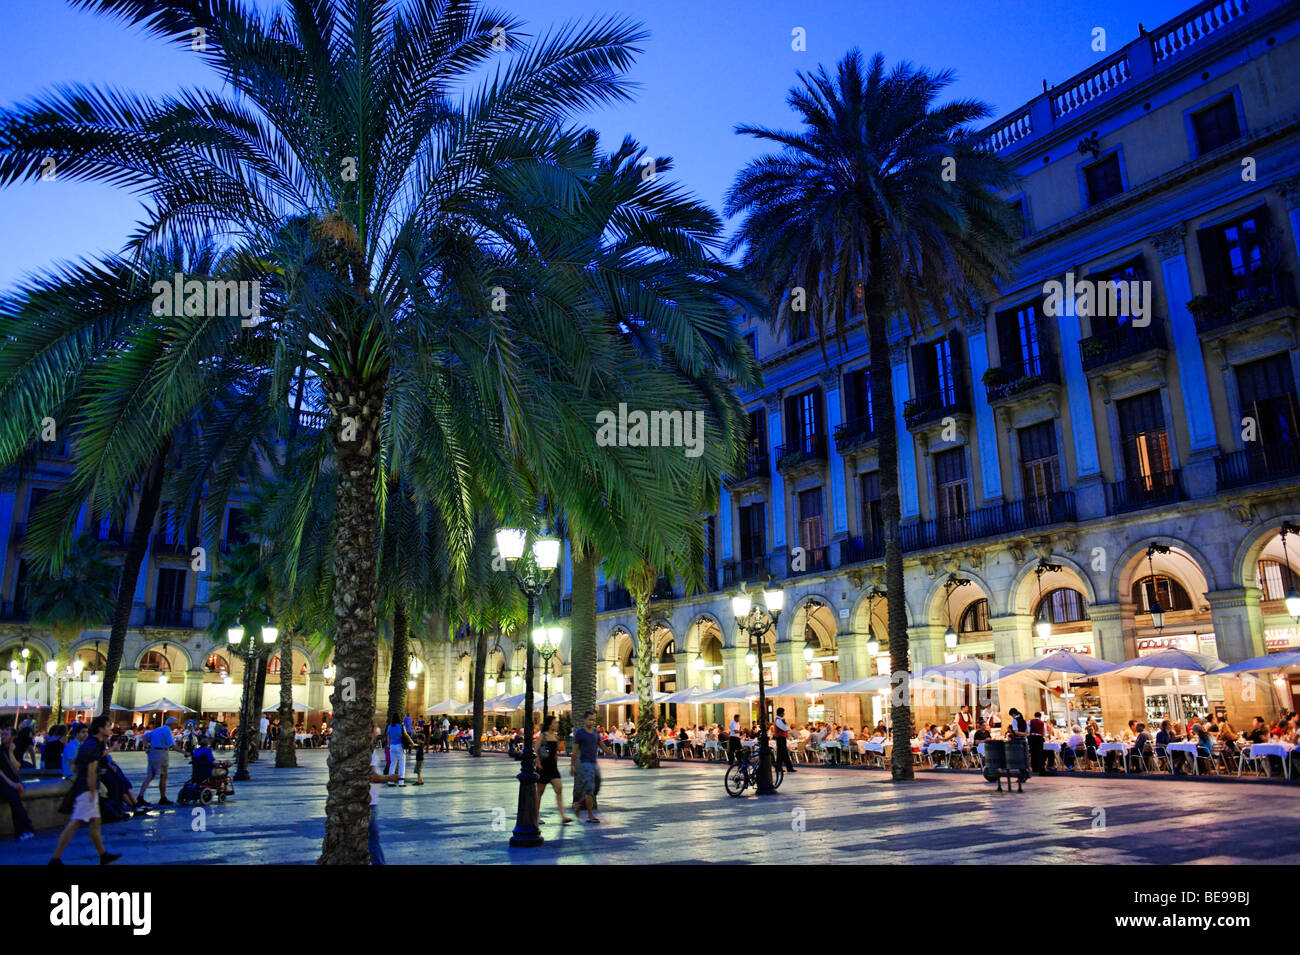 People dining alfresco on Plaza Reial. Barcelona. Spain Stock Photo